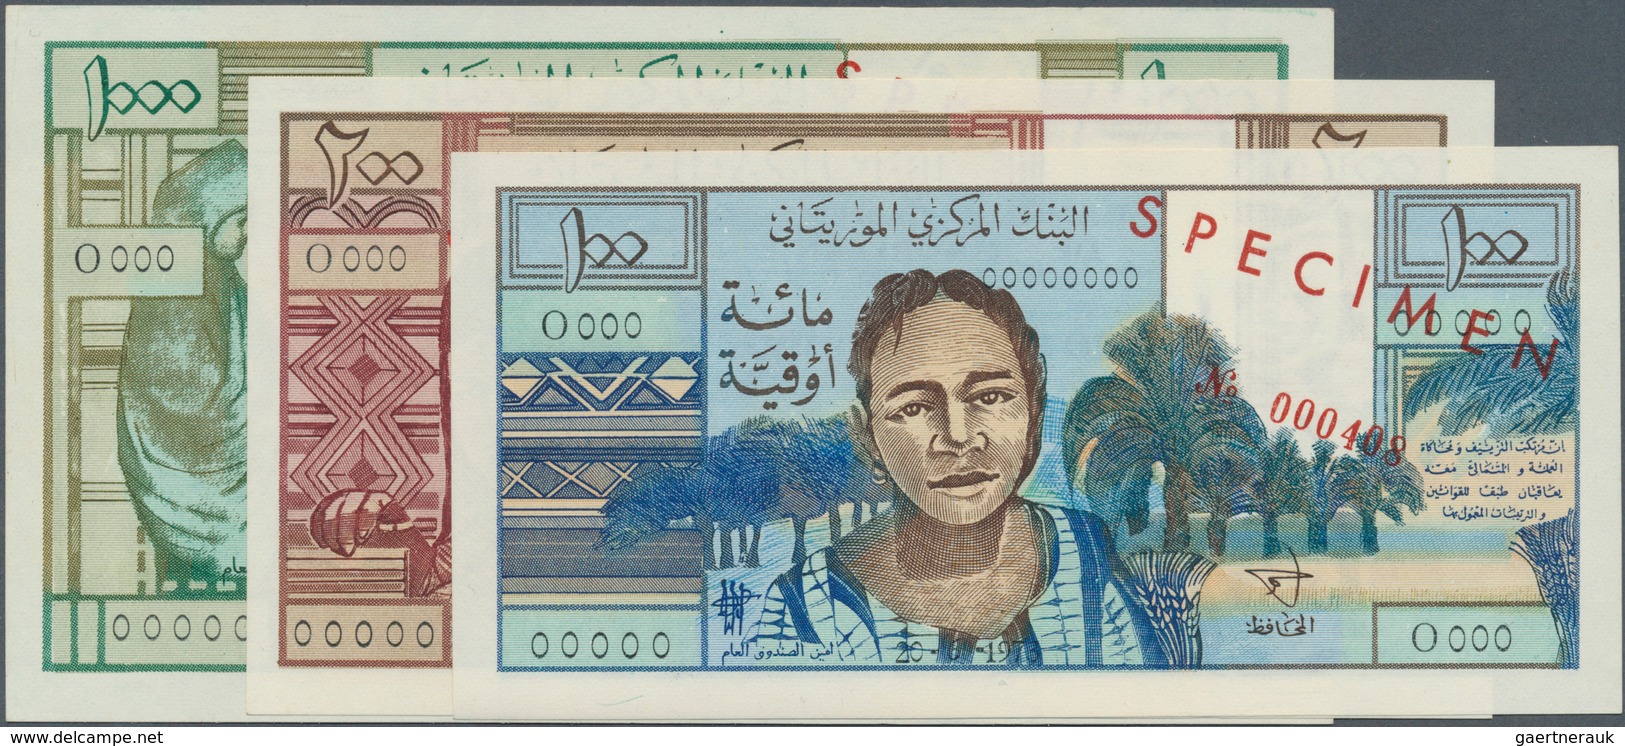 Mauritania / Mauretanien: Set 3 Specimen Notes From 100 To 1000 Ouguiya 1973 P. 1s-3s All In Conditi - Mauritania